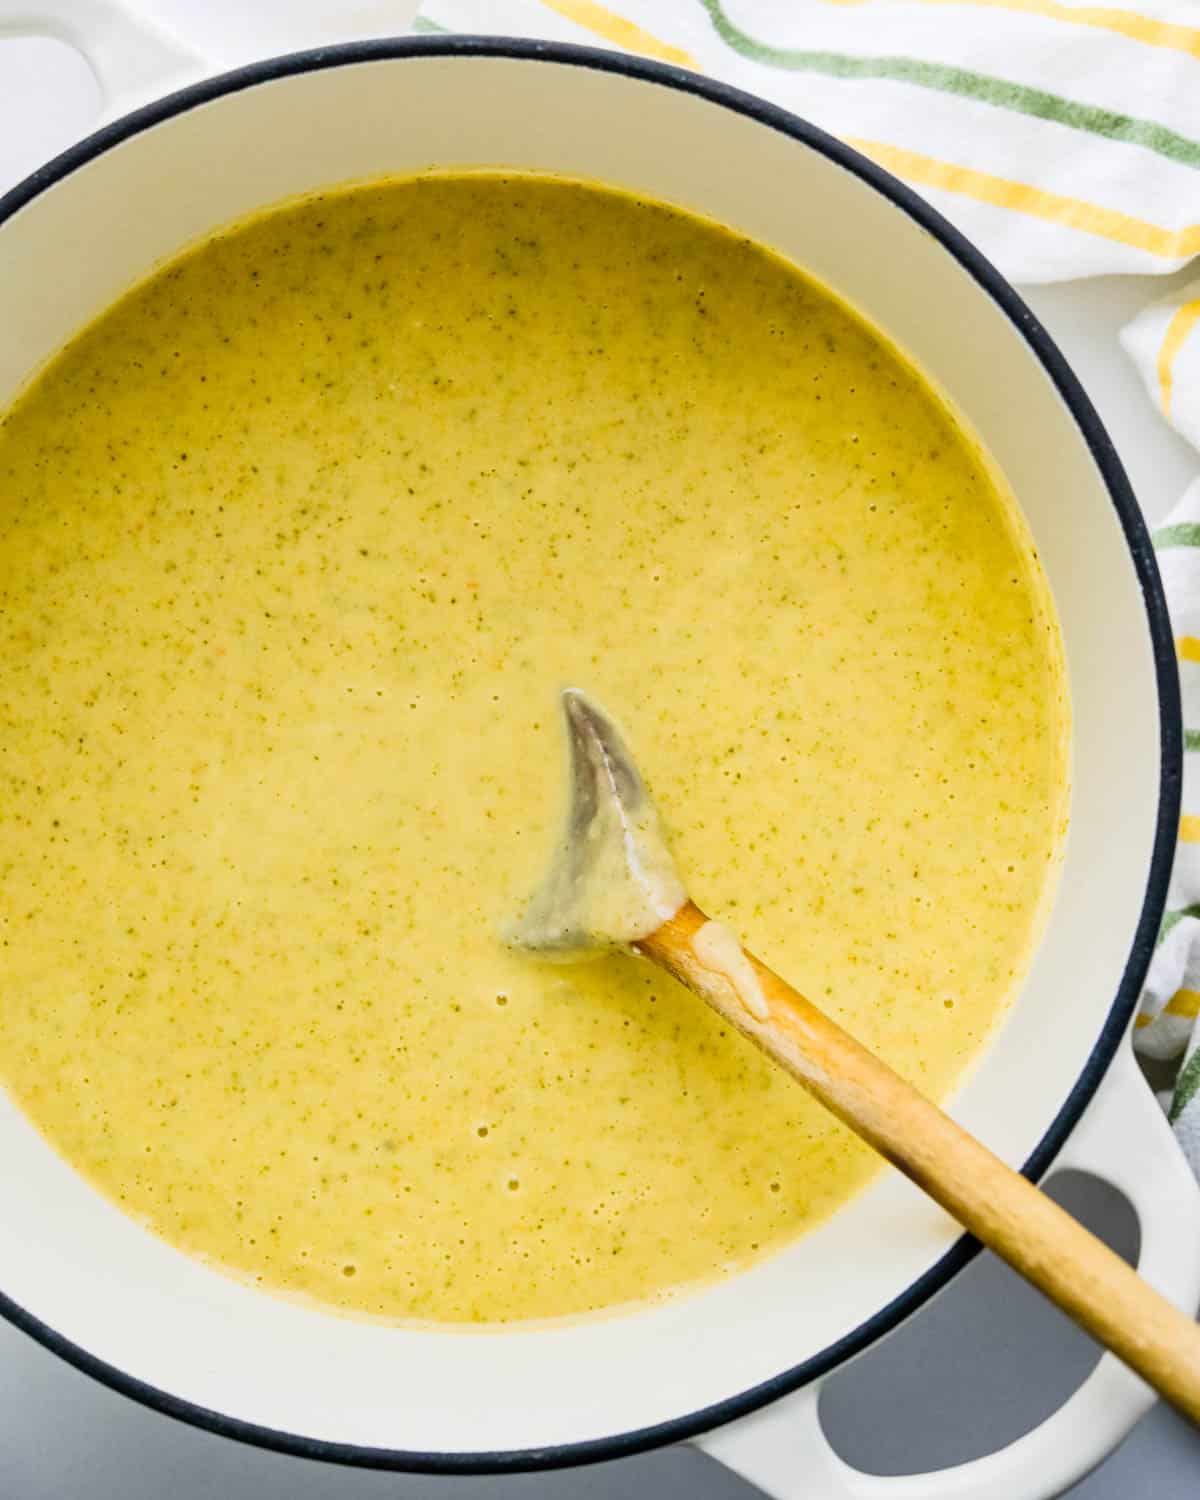 A pot of broccoli soup, ready to eat.